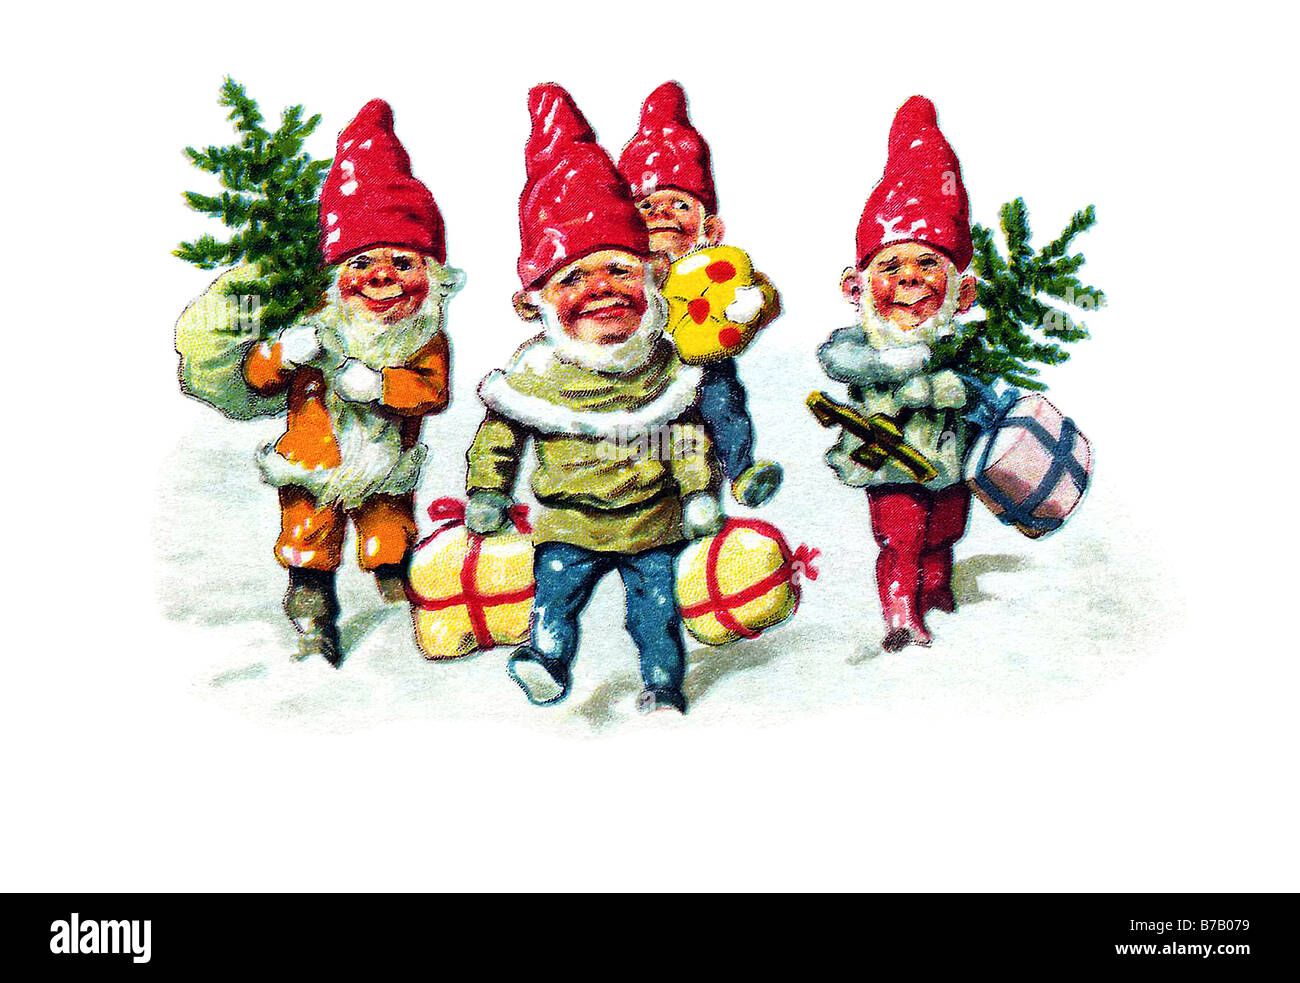 dwarfs brining the presents at christmas Stock Photo